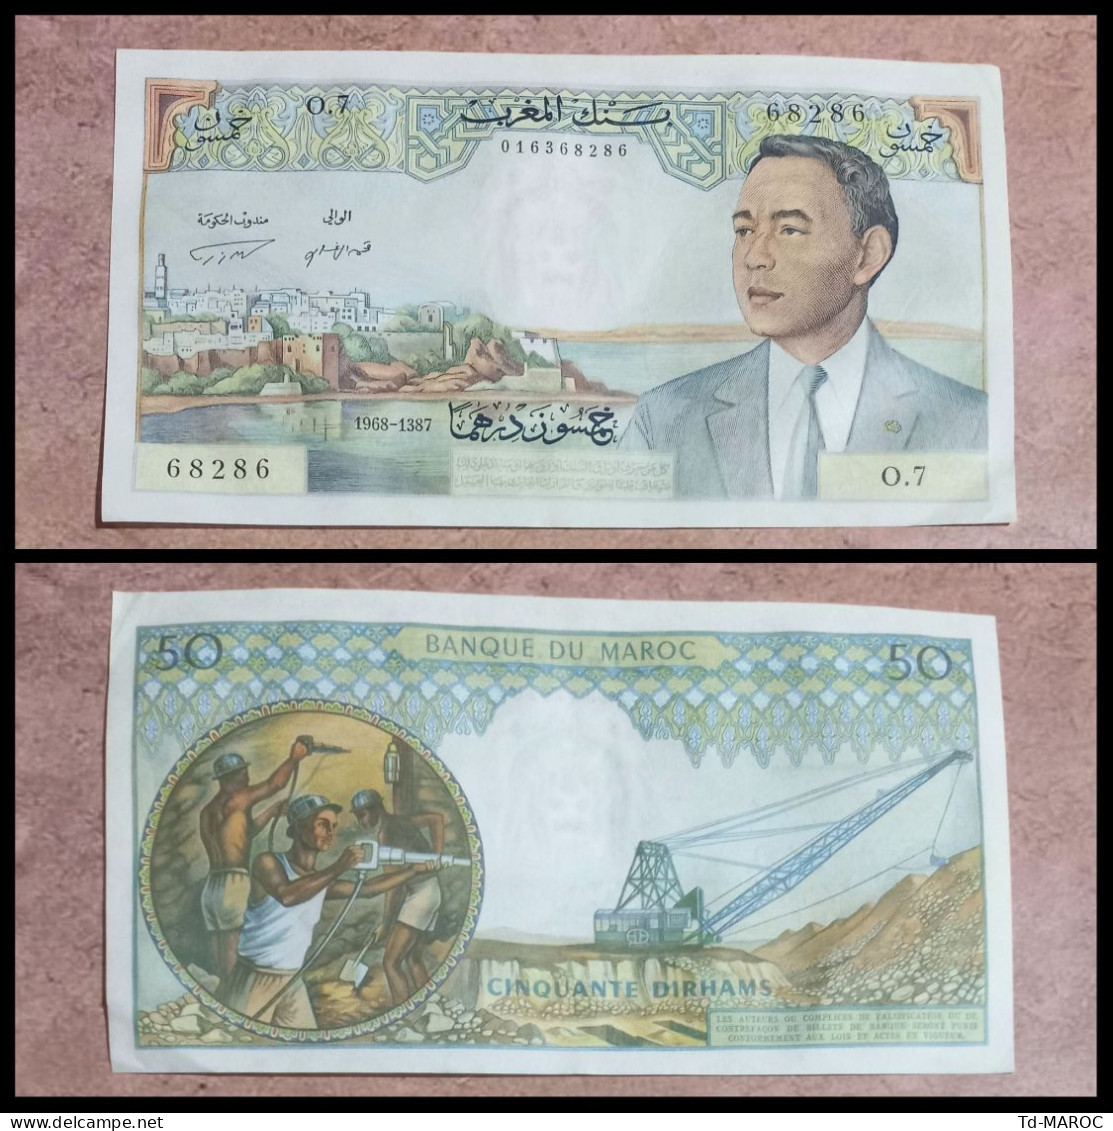 MAROC : Billet De 50 Dirhams 1968 P.55c / Alph.O.7 N° De Série RADAR 68286 - Maroc